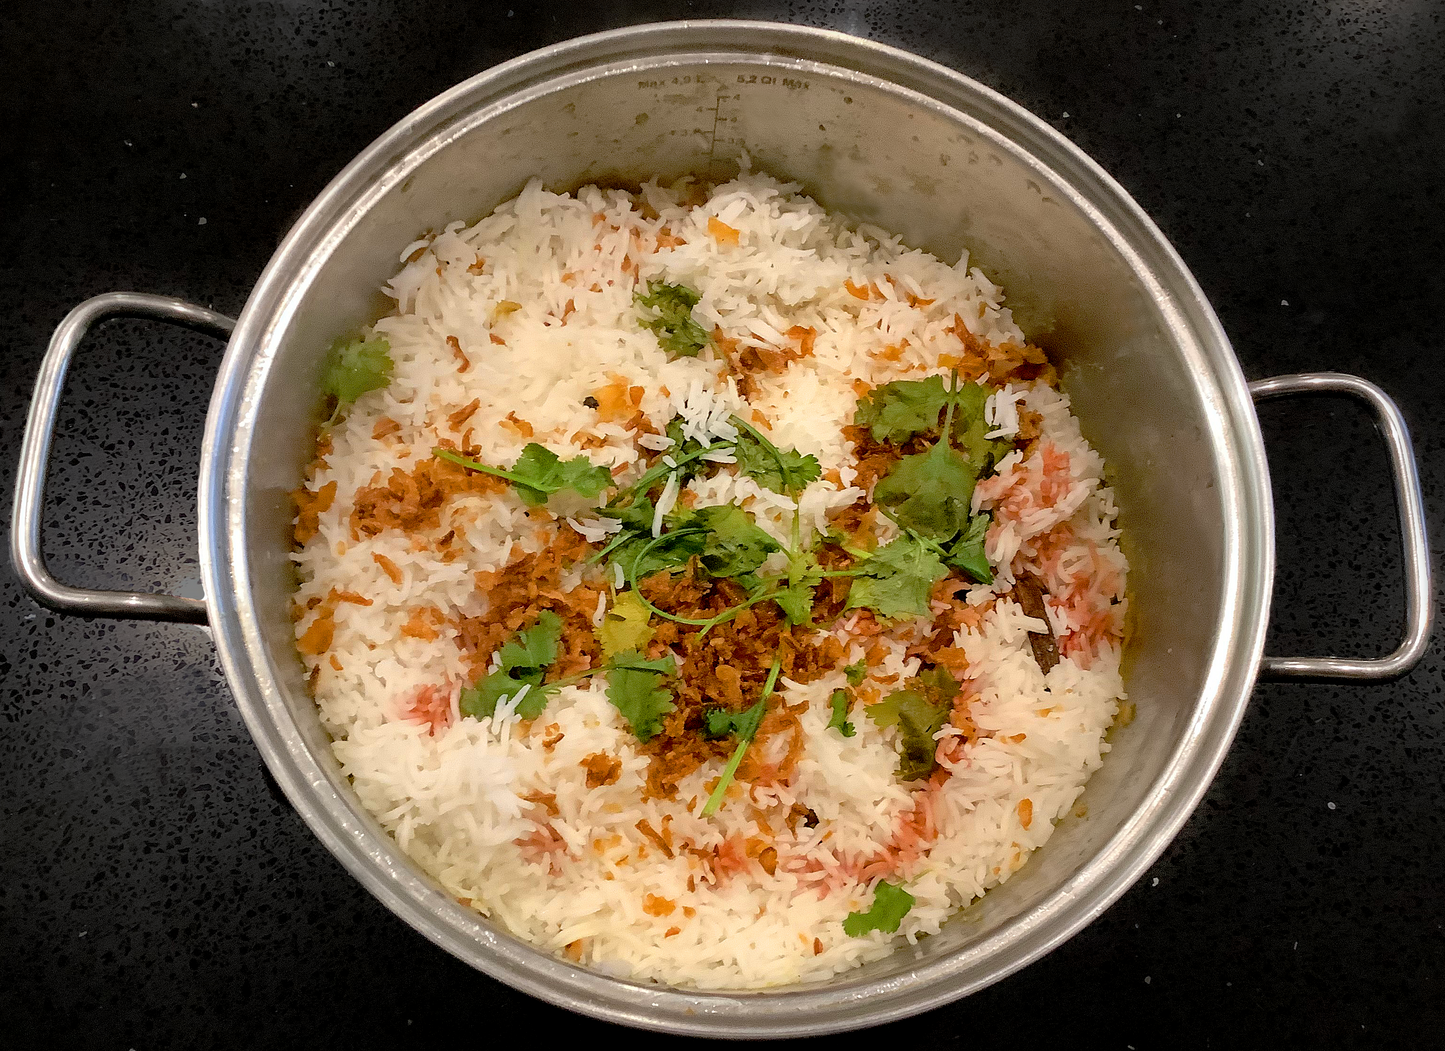 Yakhni Pilau rice in a large metallic bowl.